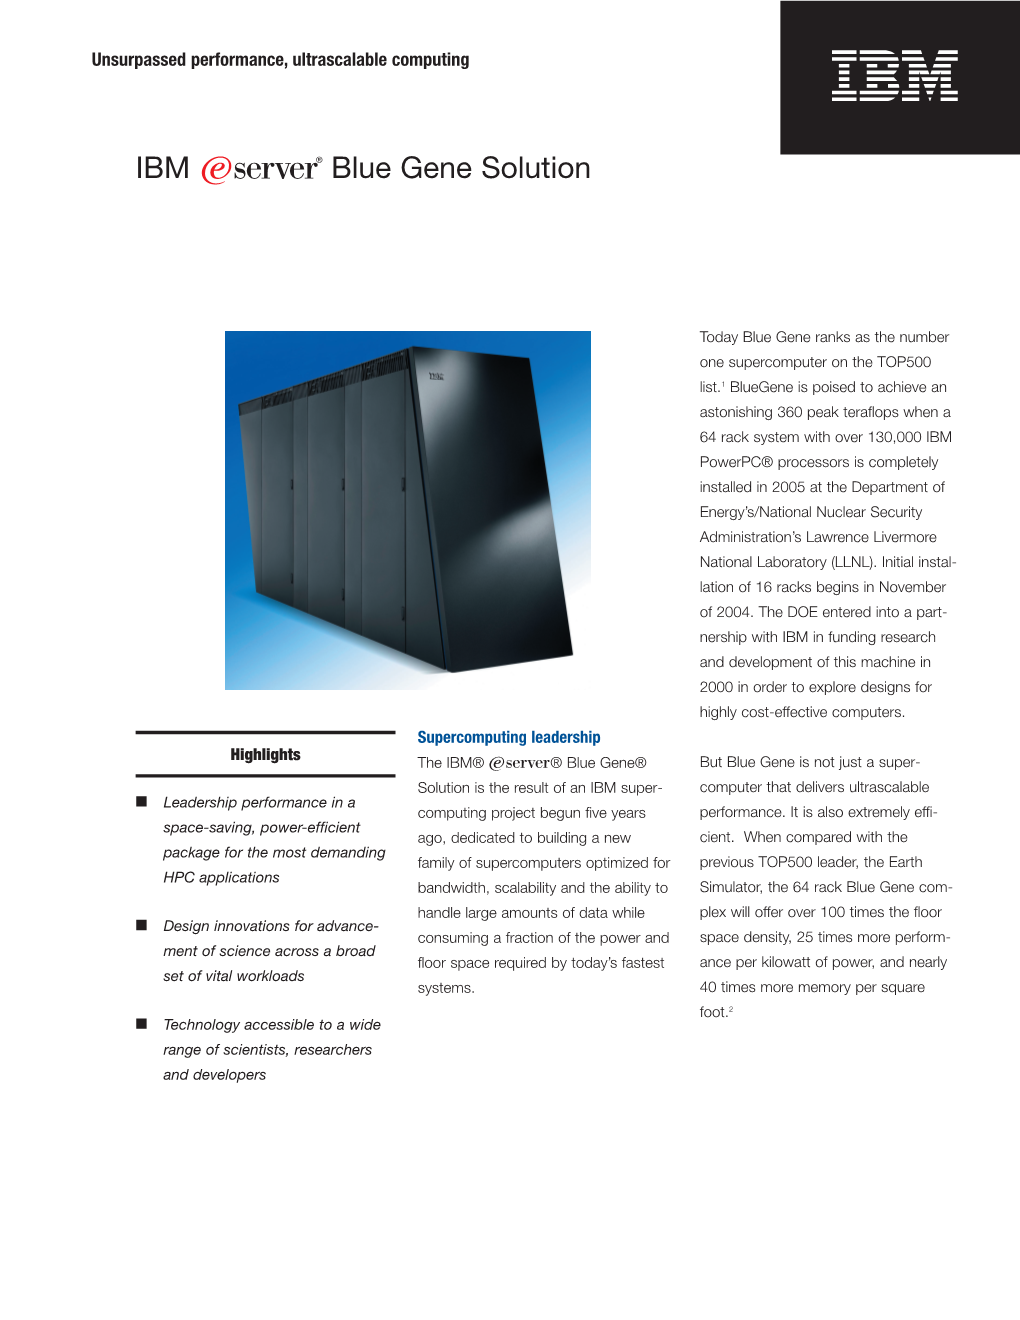 IBM Blue Gene Solution